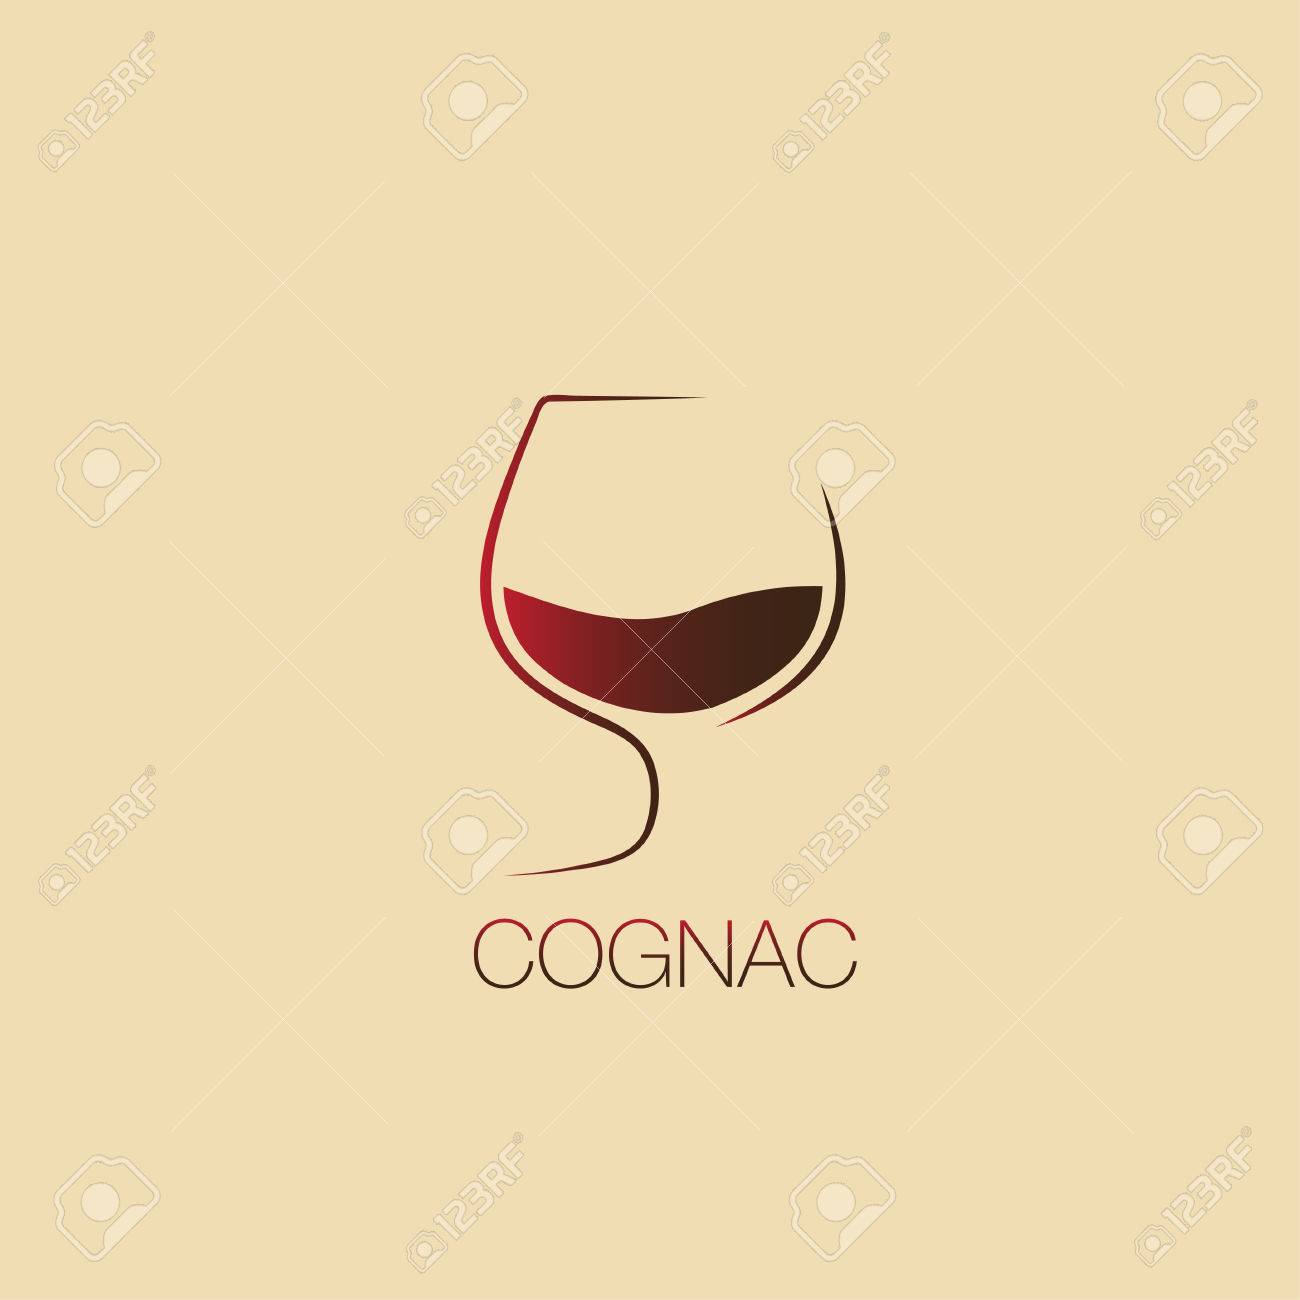 Brand: Cognac